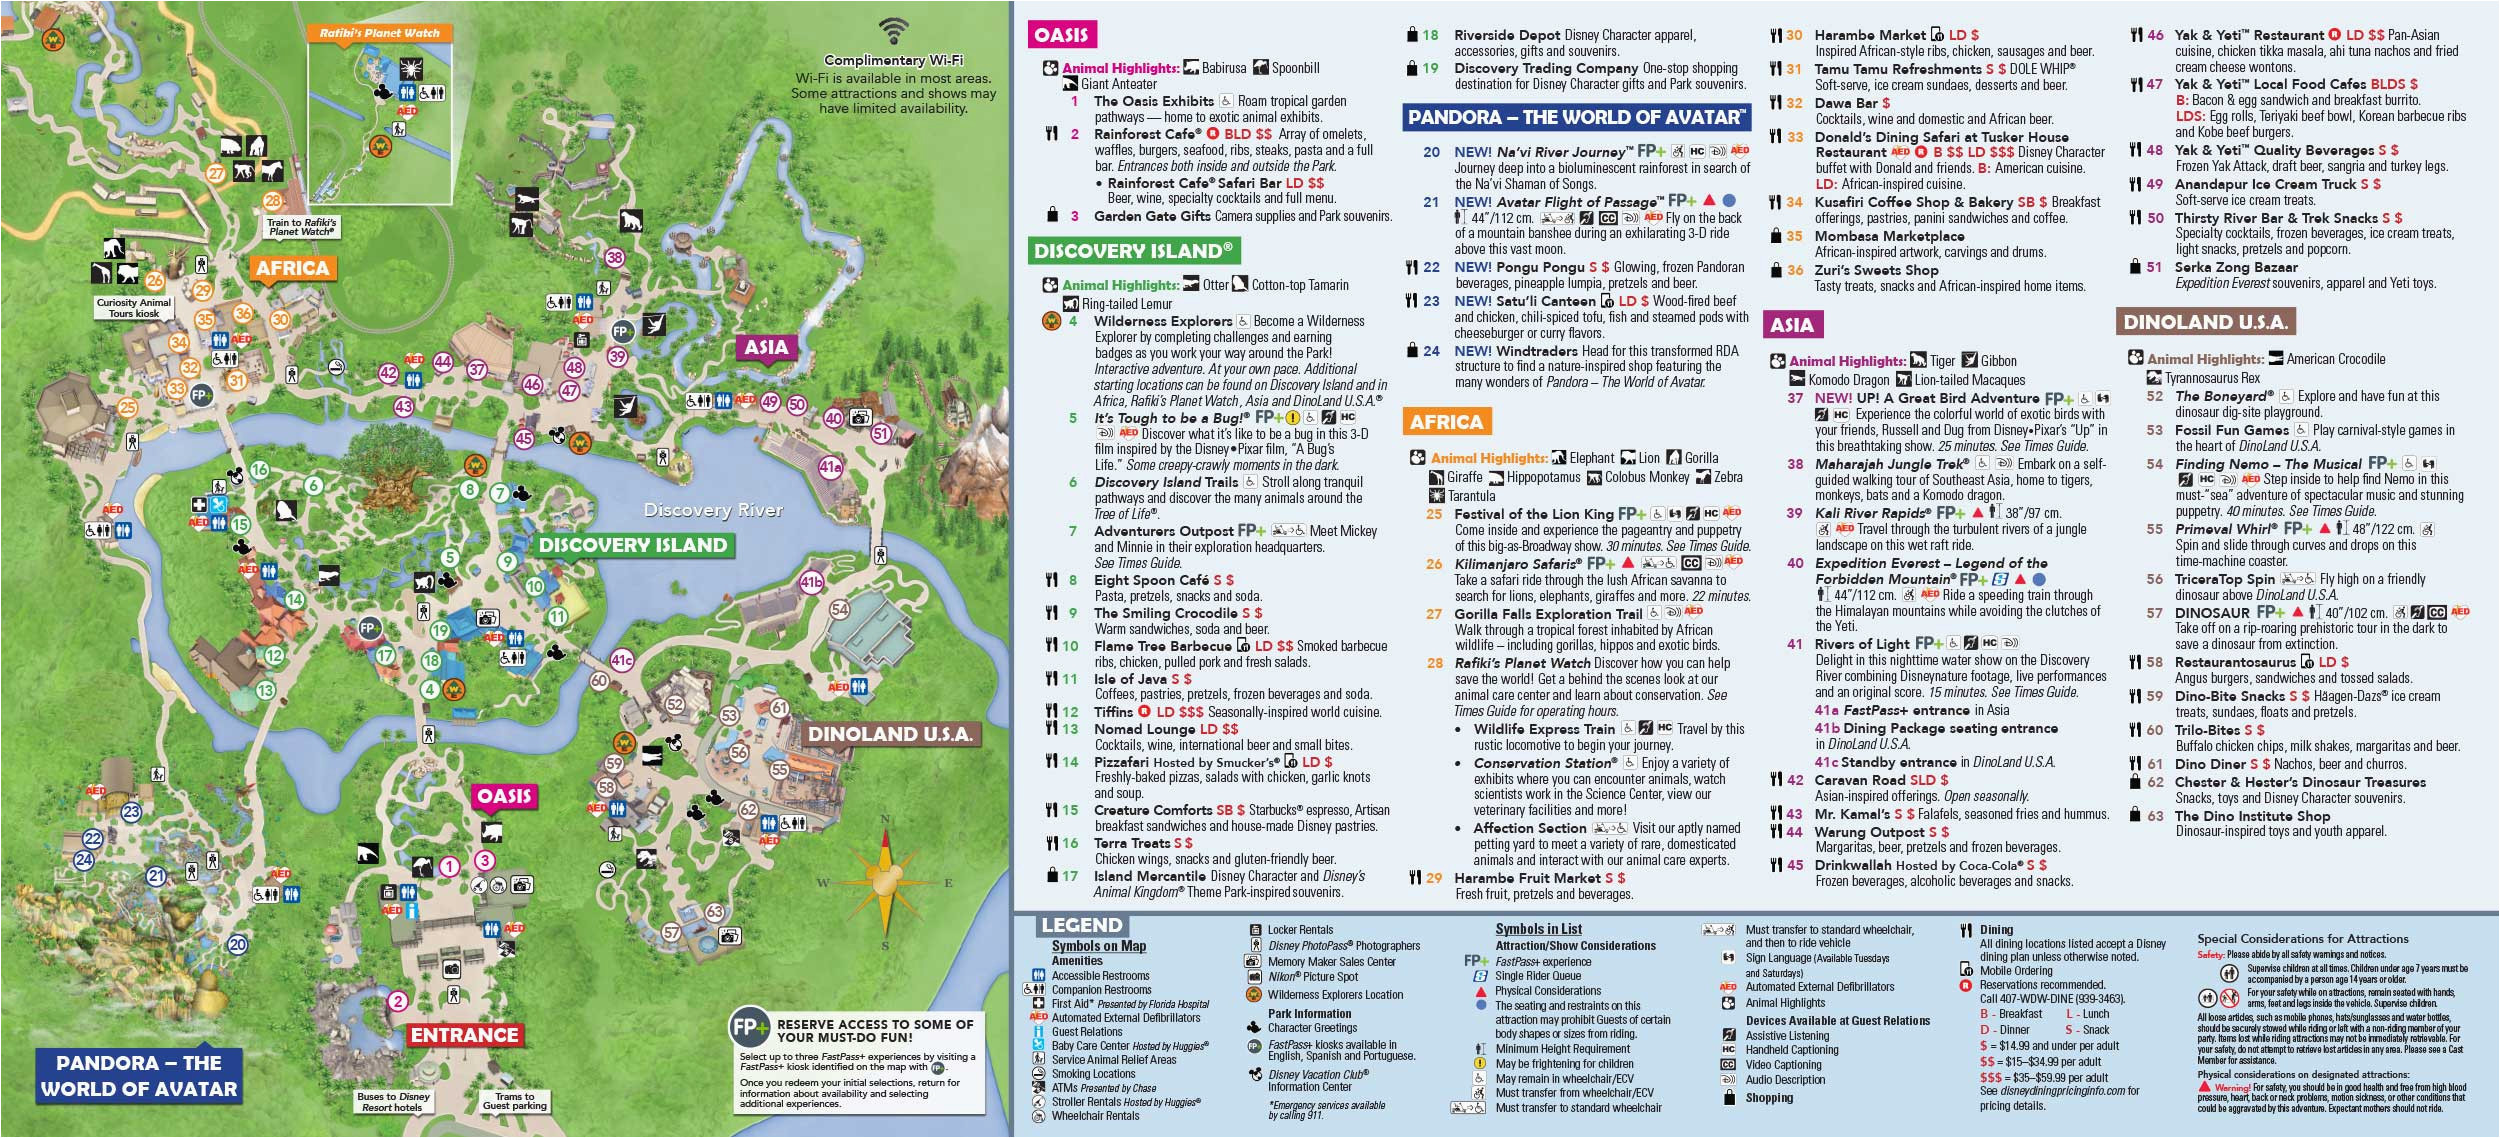 disney s animal kingdom map theme park map wide resolution